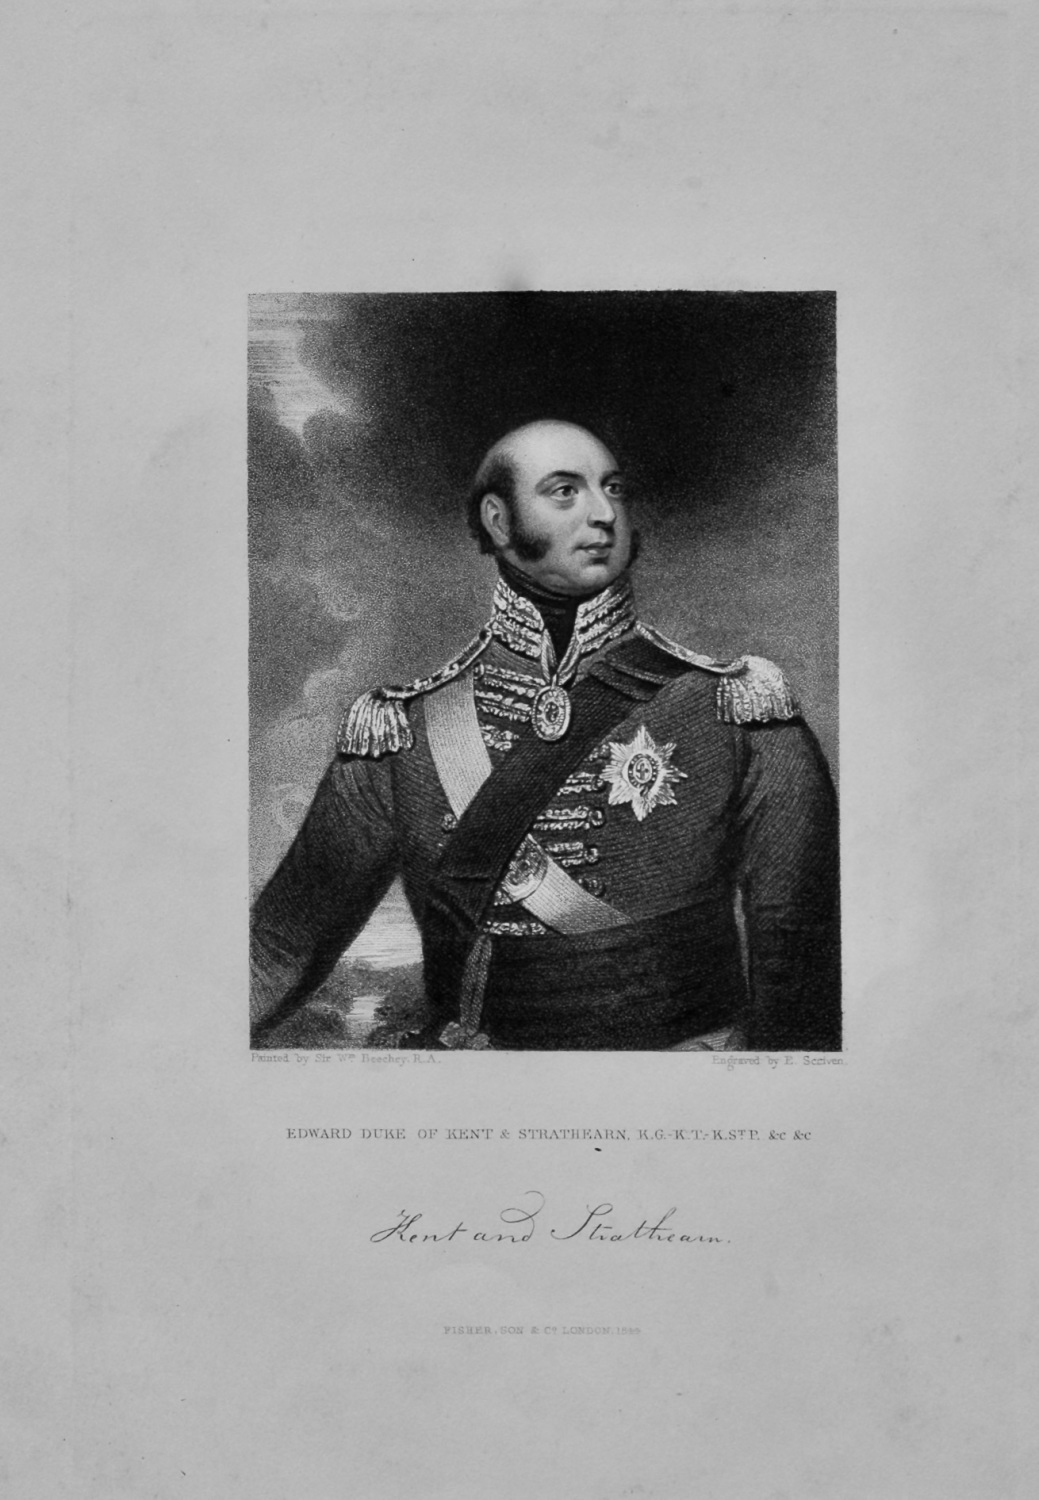 Edward Duke of Kent & Strathearn.  1844.